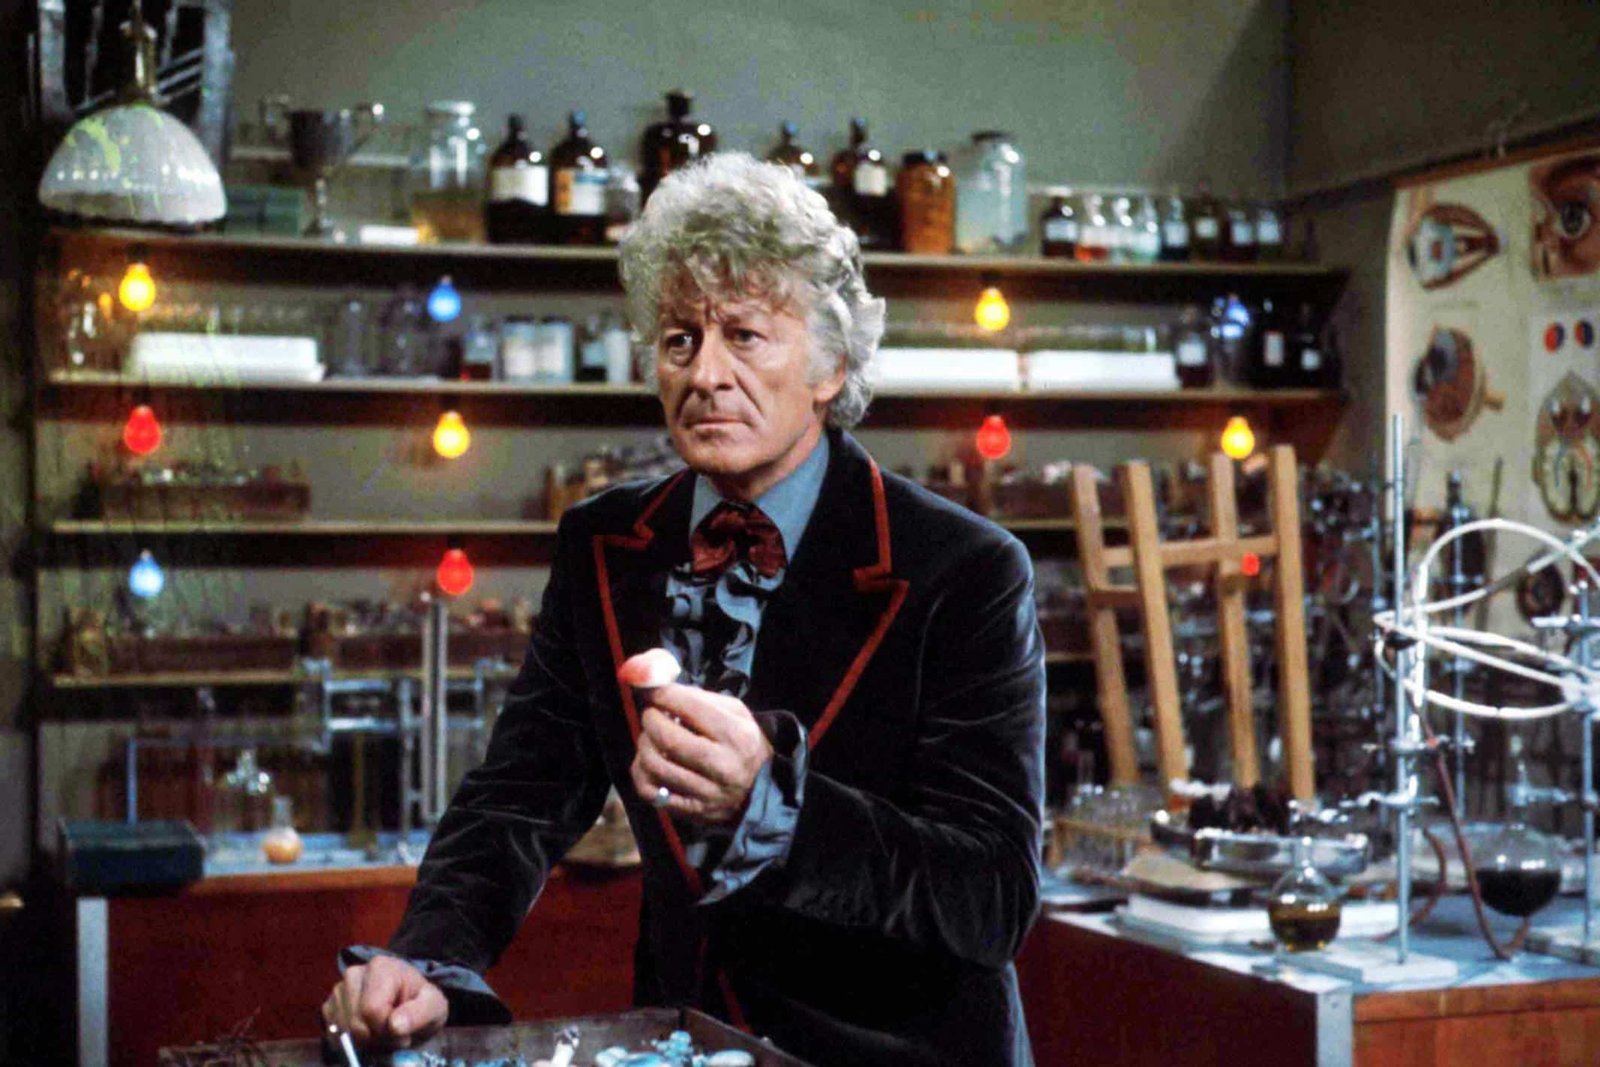 Jon Pertwee - The Third Doctor (1970-74)